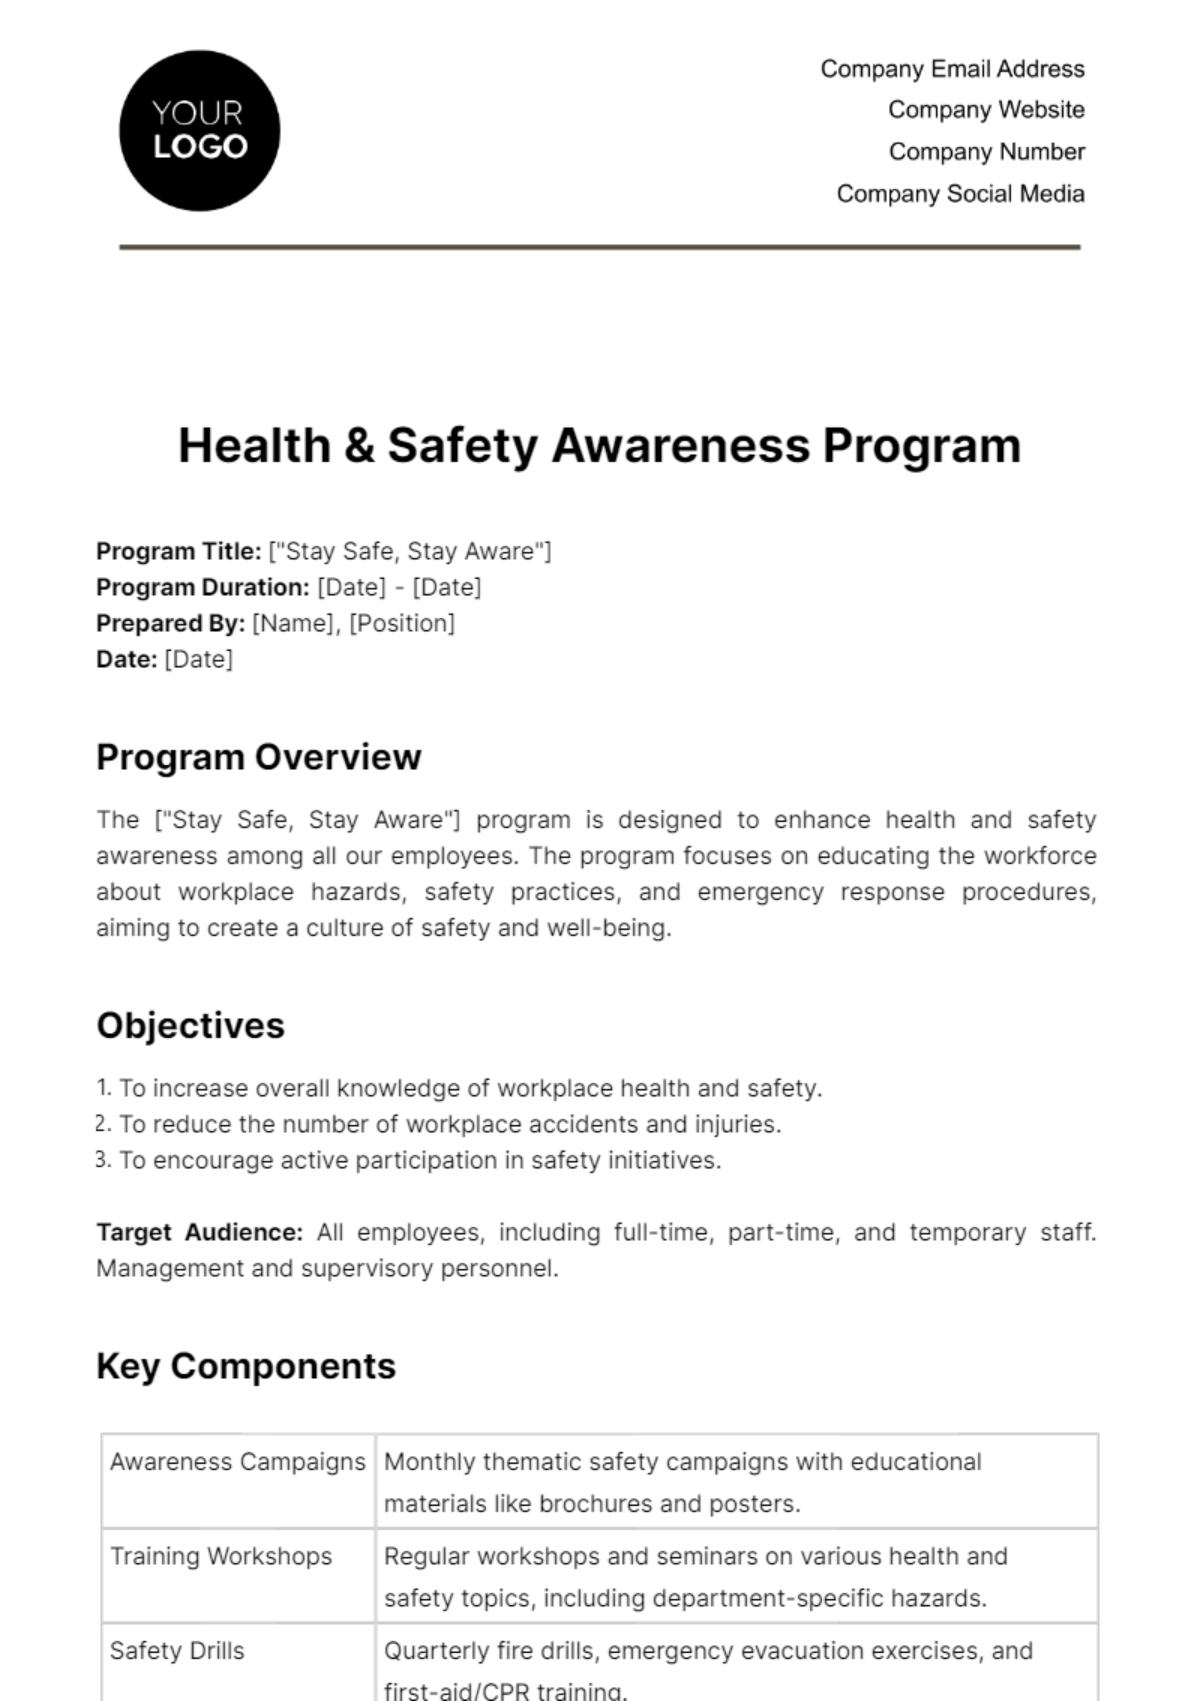 Health & Safety Awareness Program Template